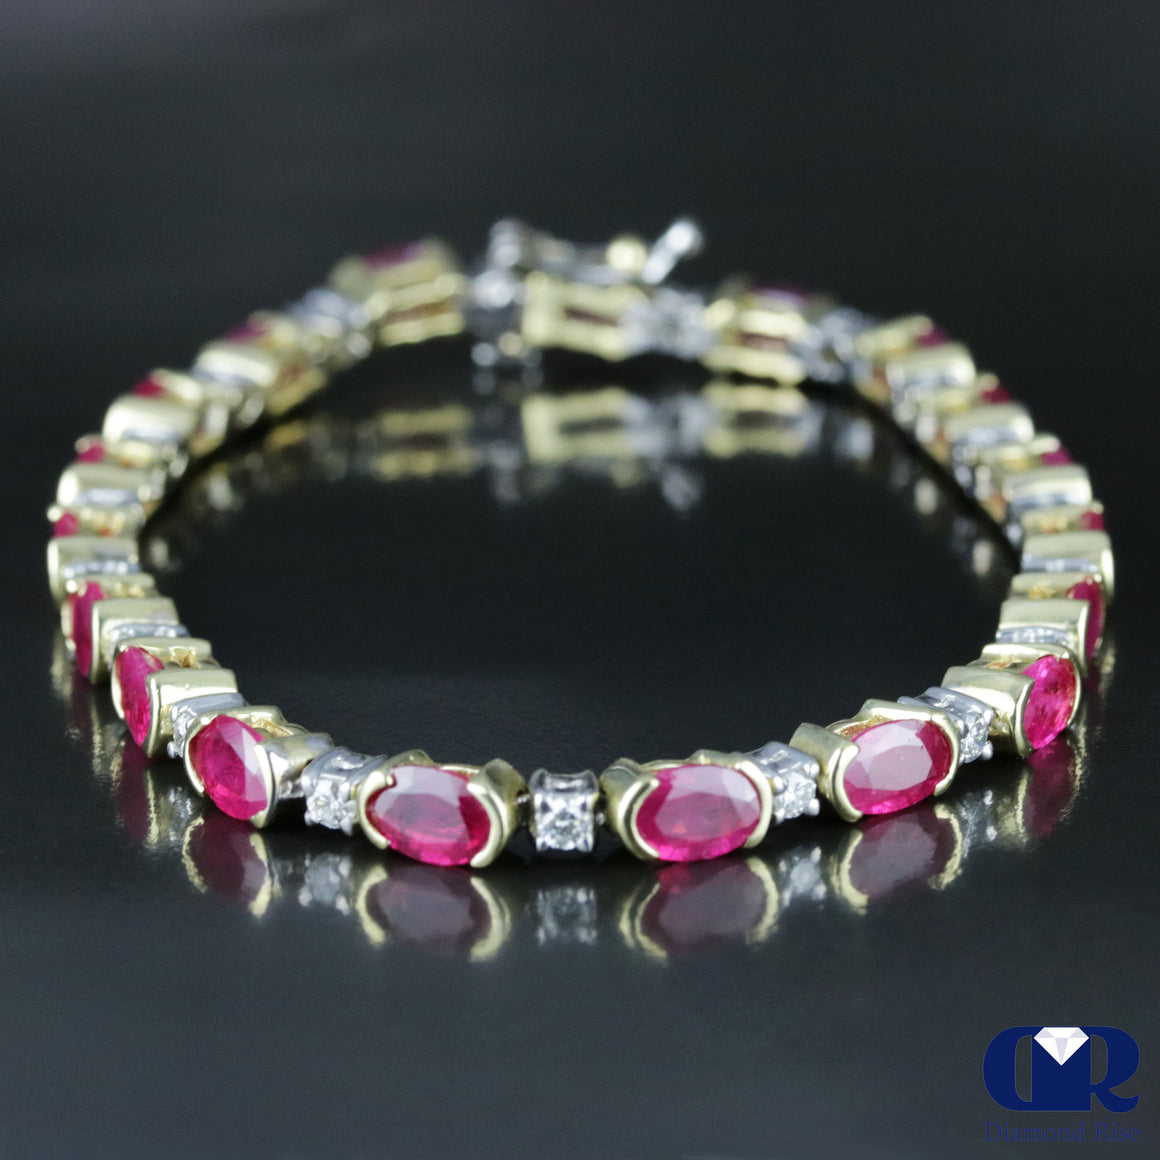 Women's 11.27 Carat Ruby & Diamond Tennis Bracelet In 14K Yellow & White Gold - Diamond Rise Jewelry